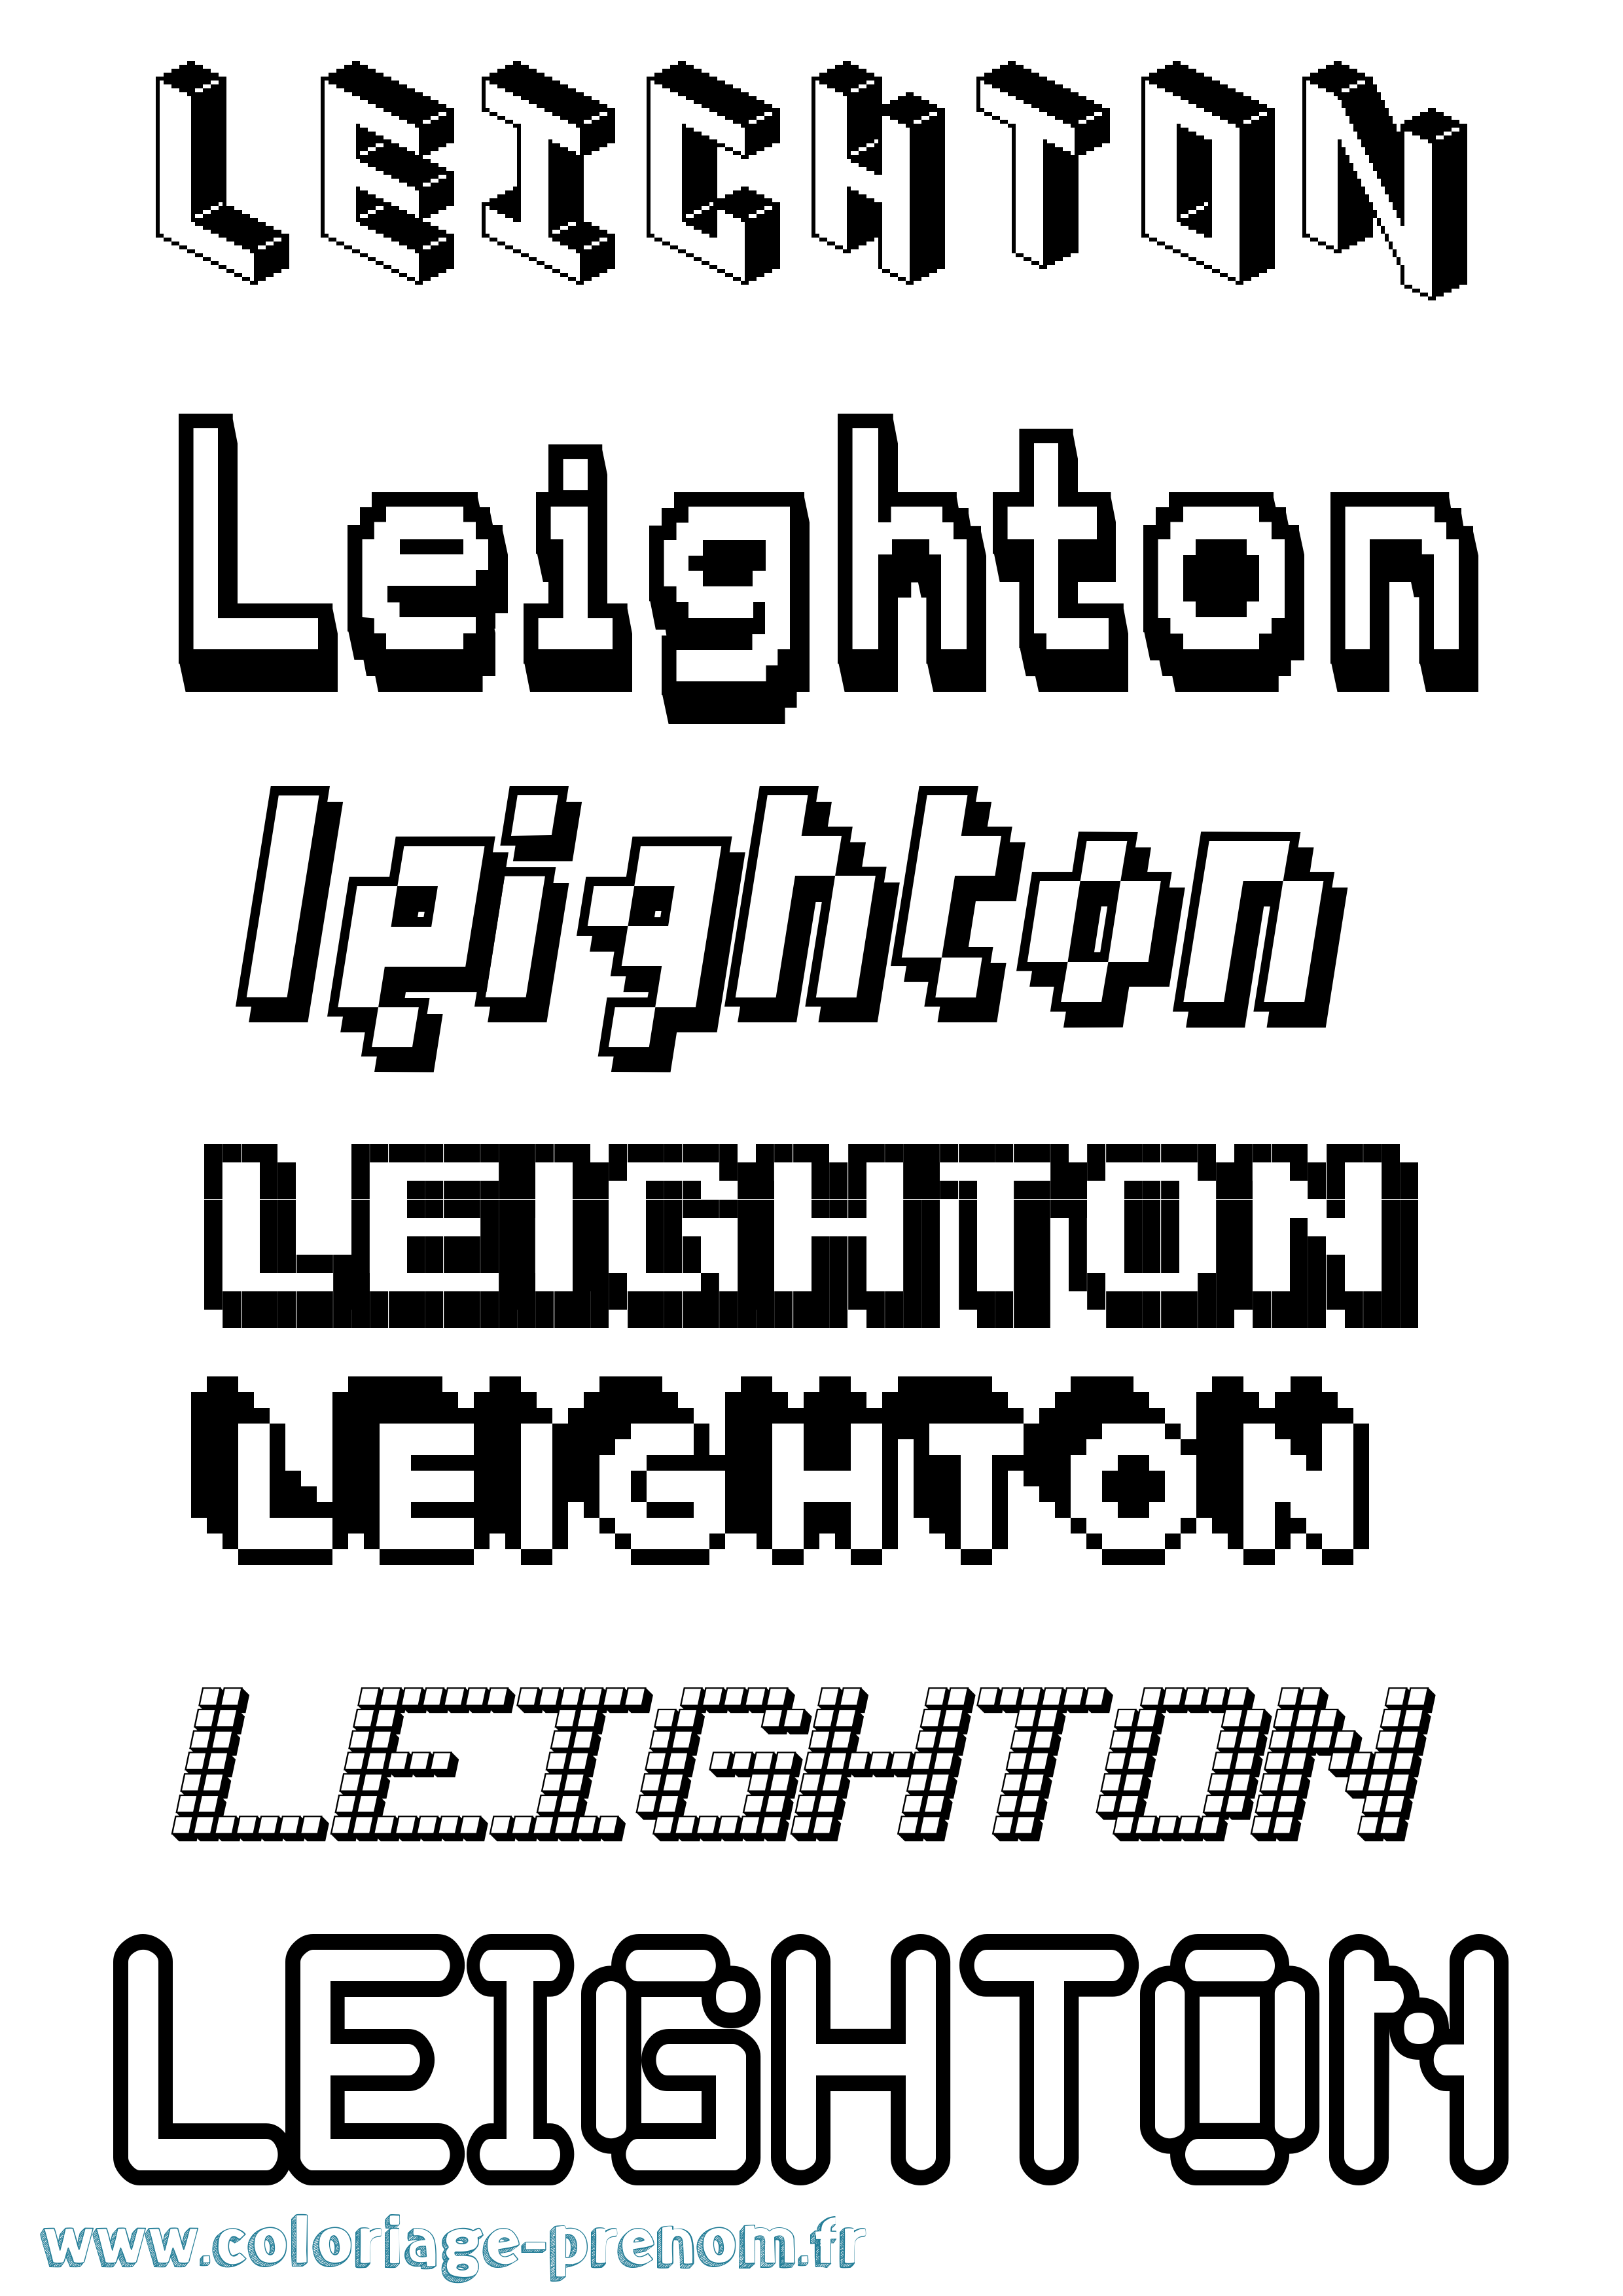 Coloriage prénom Leighton Pixel